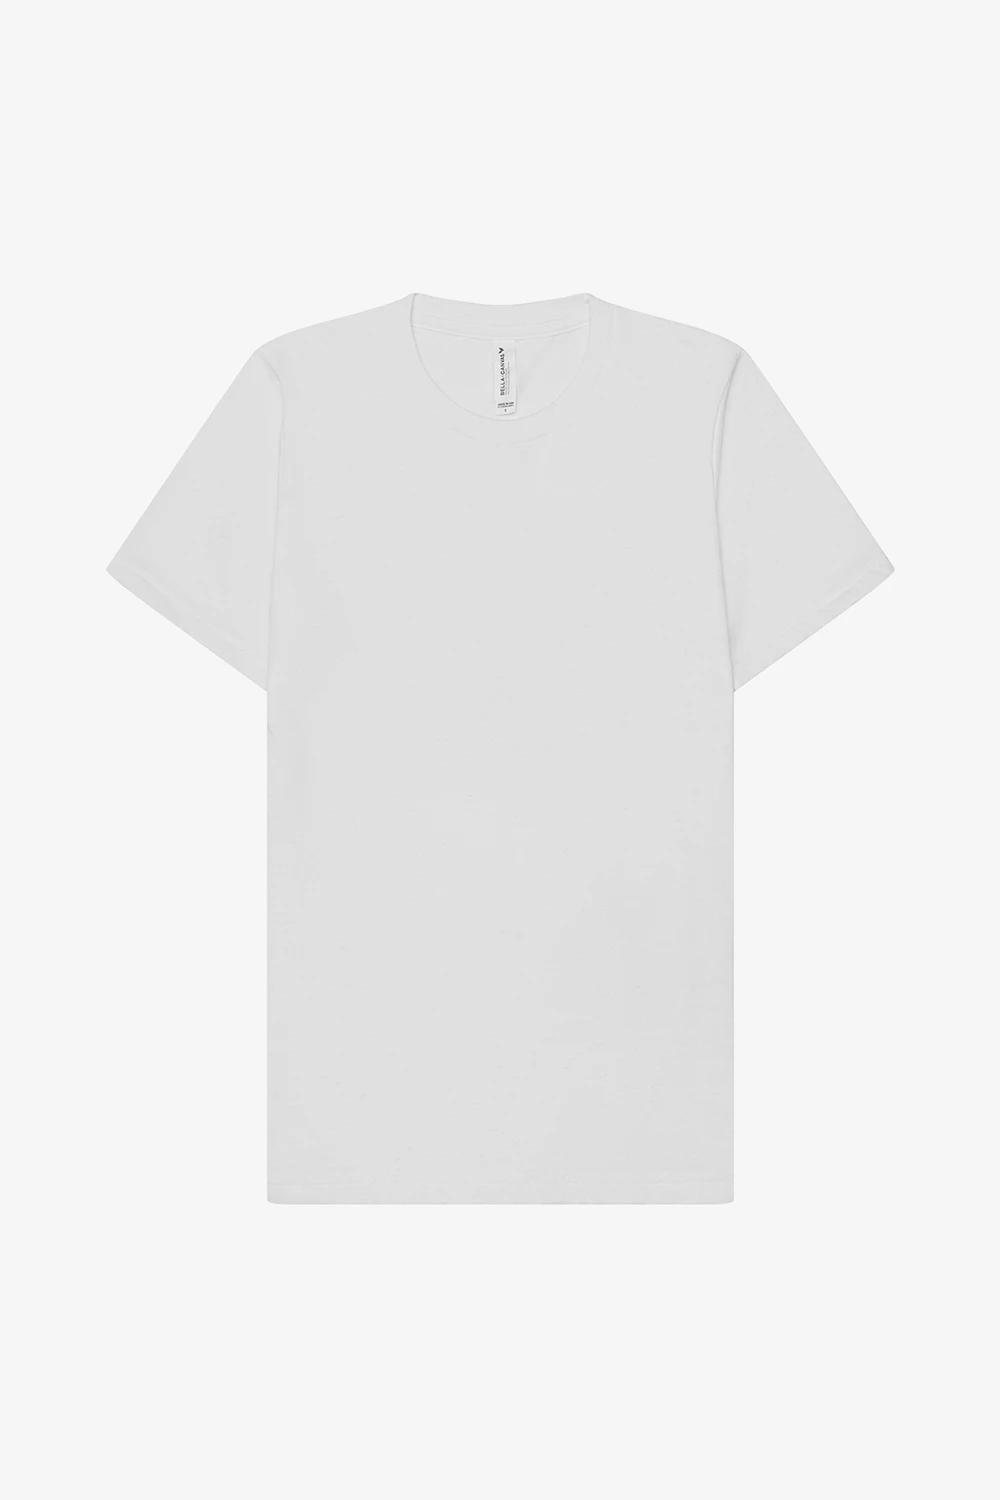 Wholesale Clothing Distributors Bulk, Plain Blank T Shirts | Tee Shirts | ®